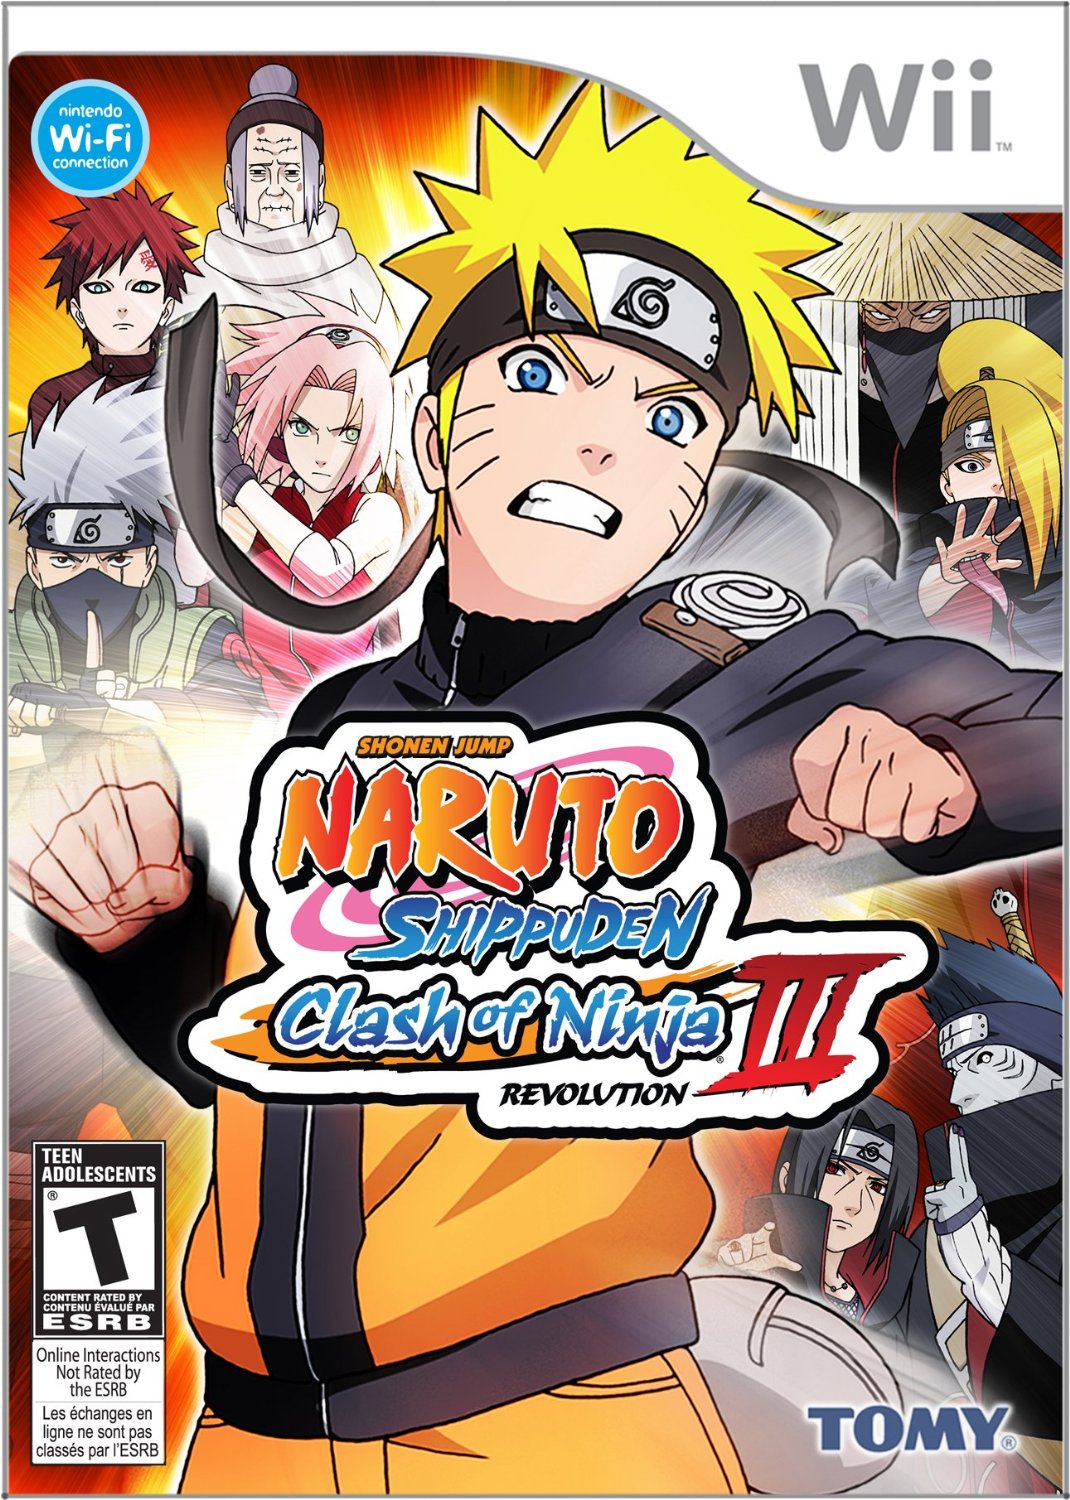 Naruto: Clash Of Ninja Revolution Backgrounds on Wallpapers Vista